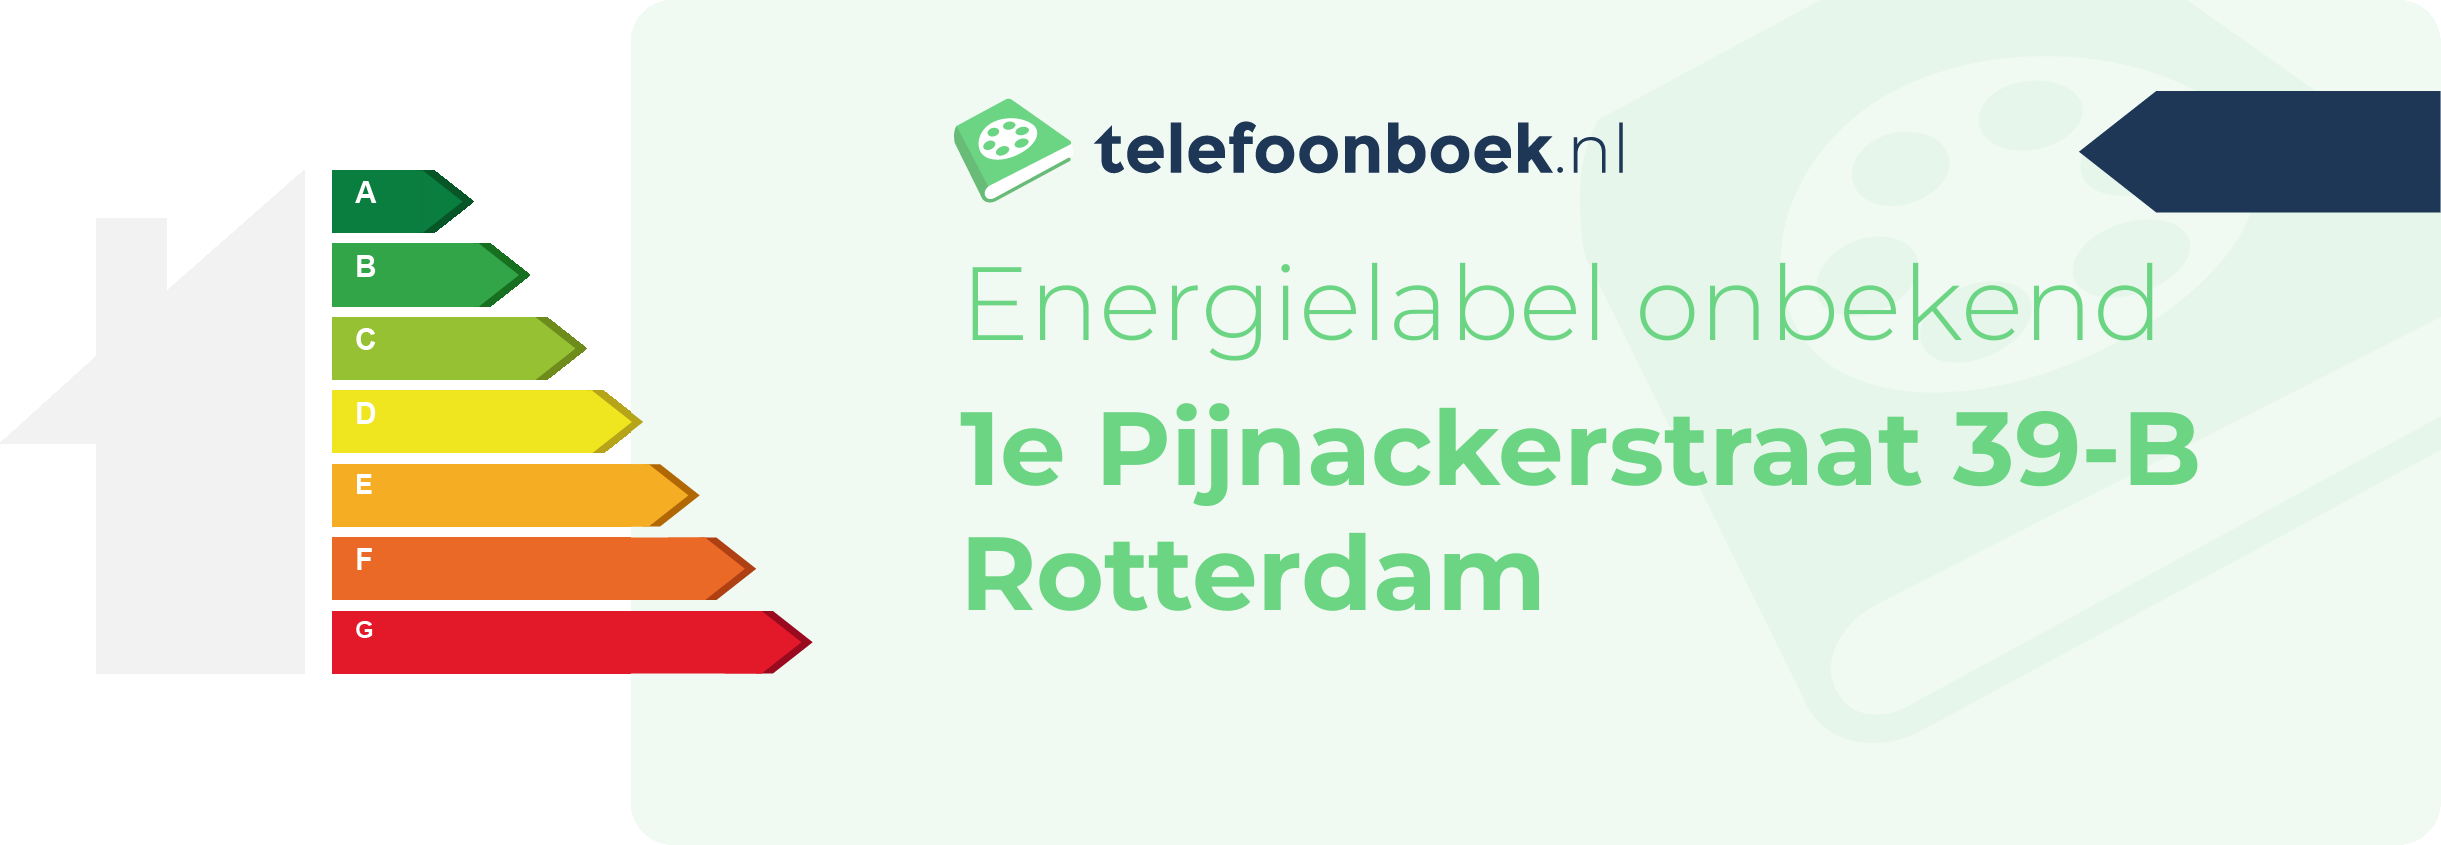 Energielabel 1e Pijnackerstraat 39-B Rotterdam